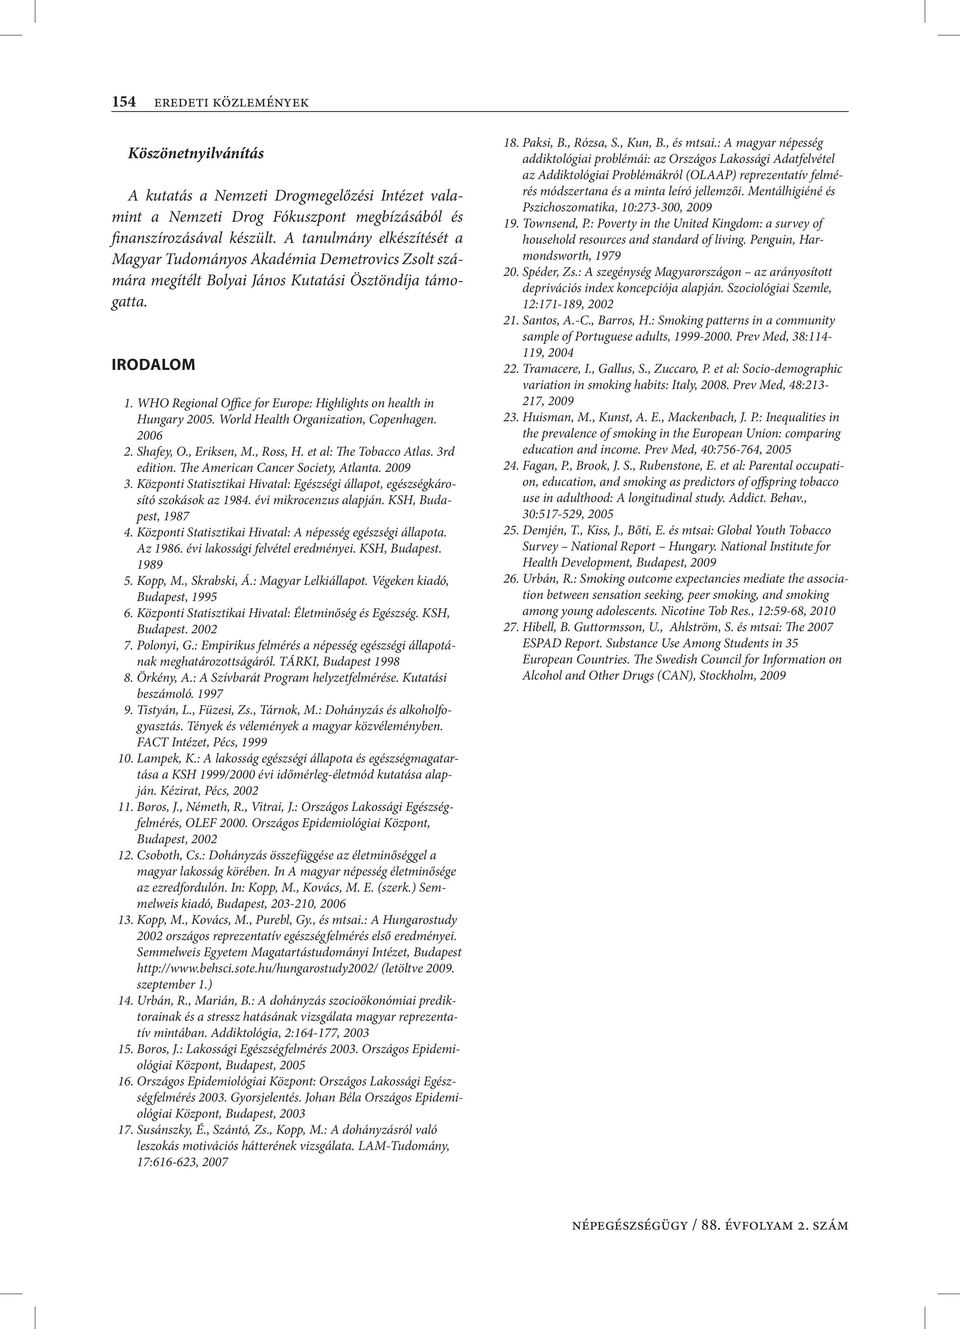 WHO Regional Office for Europe: Highlights on health in Hungary 2005. World Health Organization, Copenhagen. 2006 2. Shafey, O., Eriksen, M., Ross, H. et al: The Tobacco Atlas. 3rd edition.